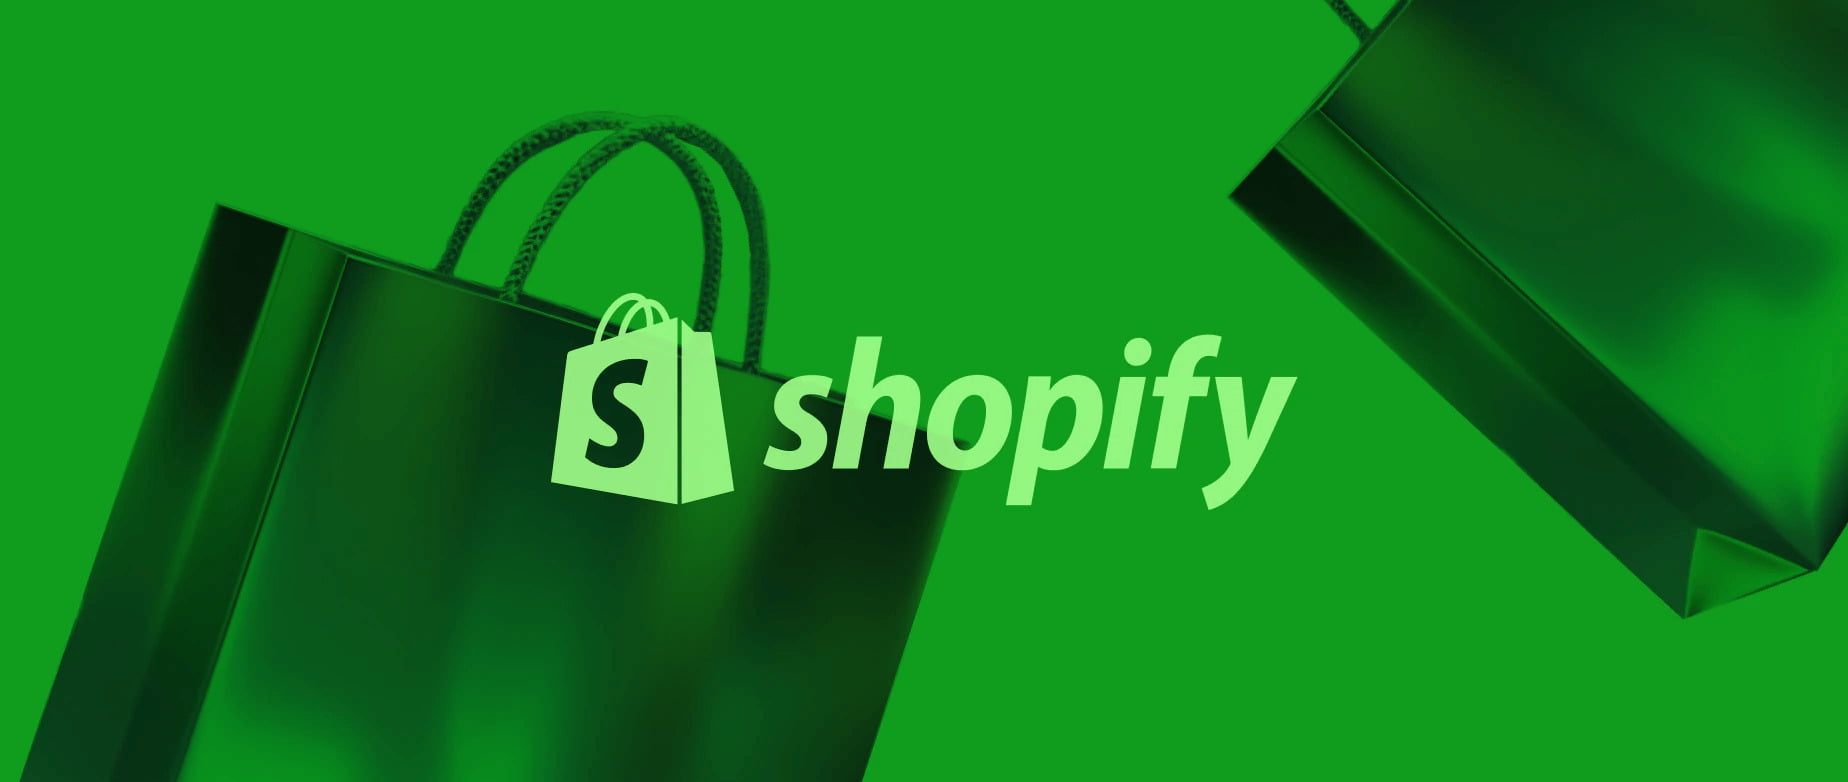 mexal shopify LINKWARE Shop: L'Alleanza Innovativa tra Mexal e Shopify